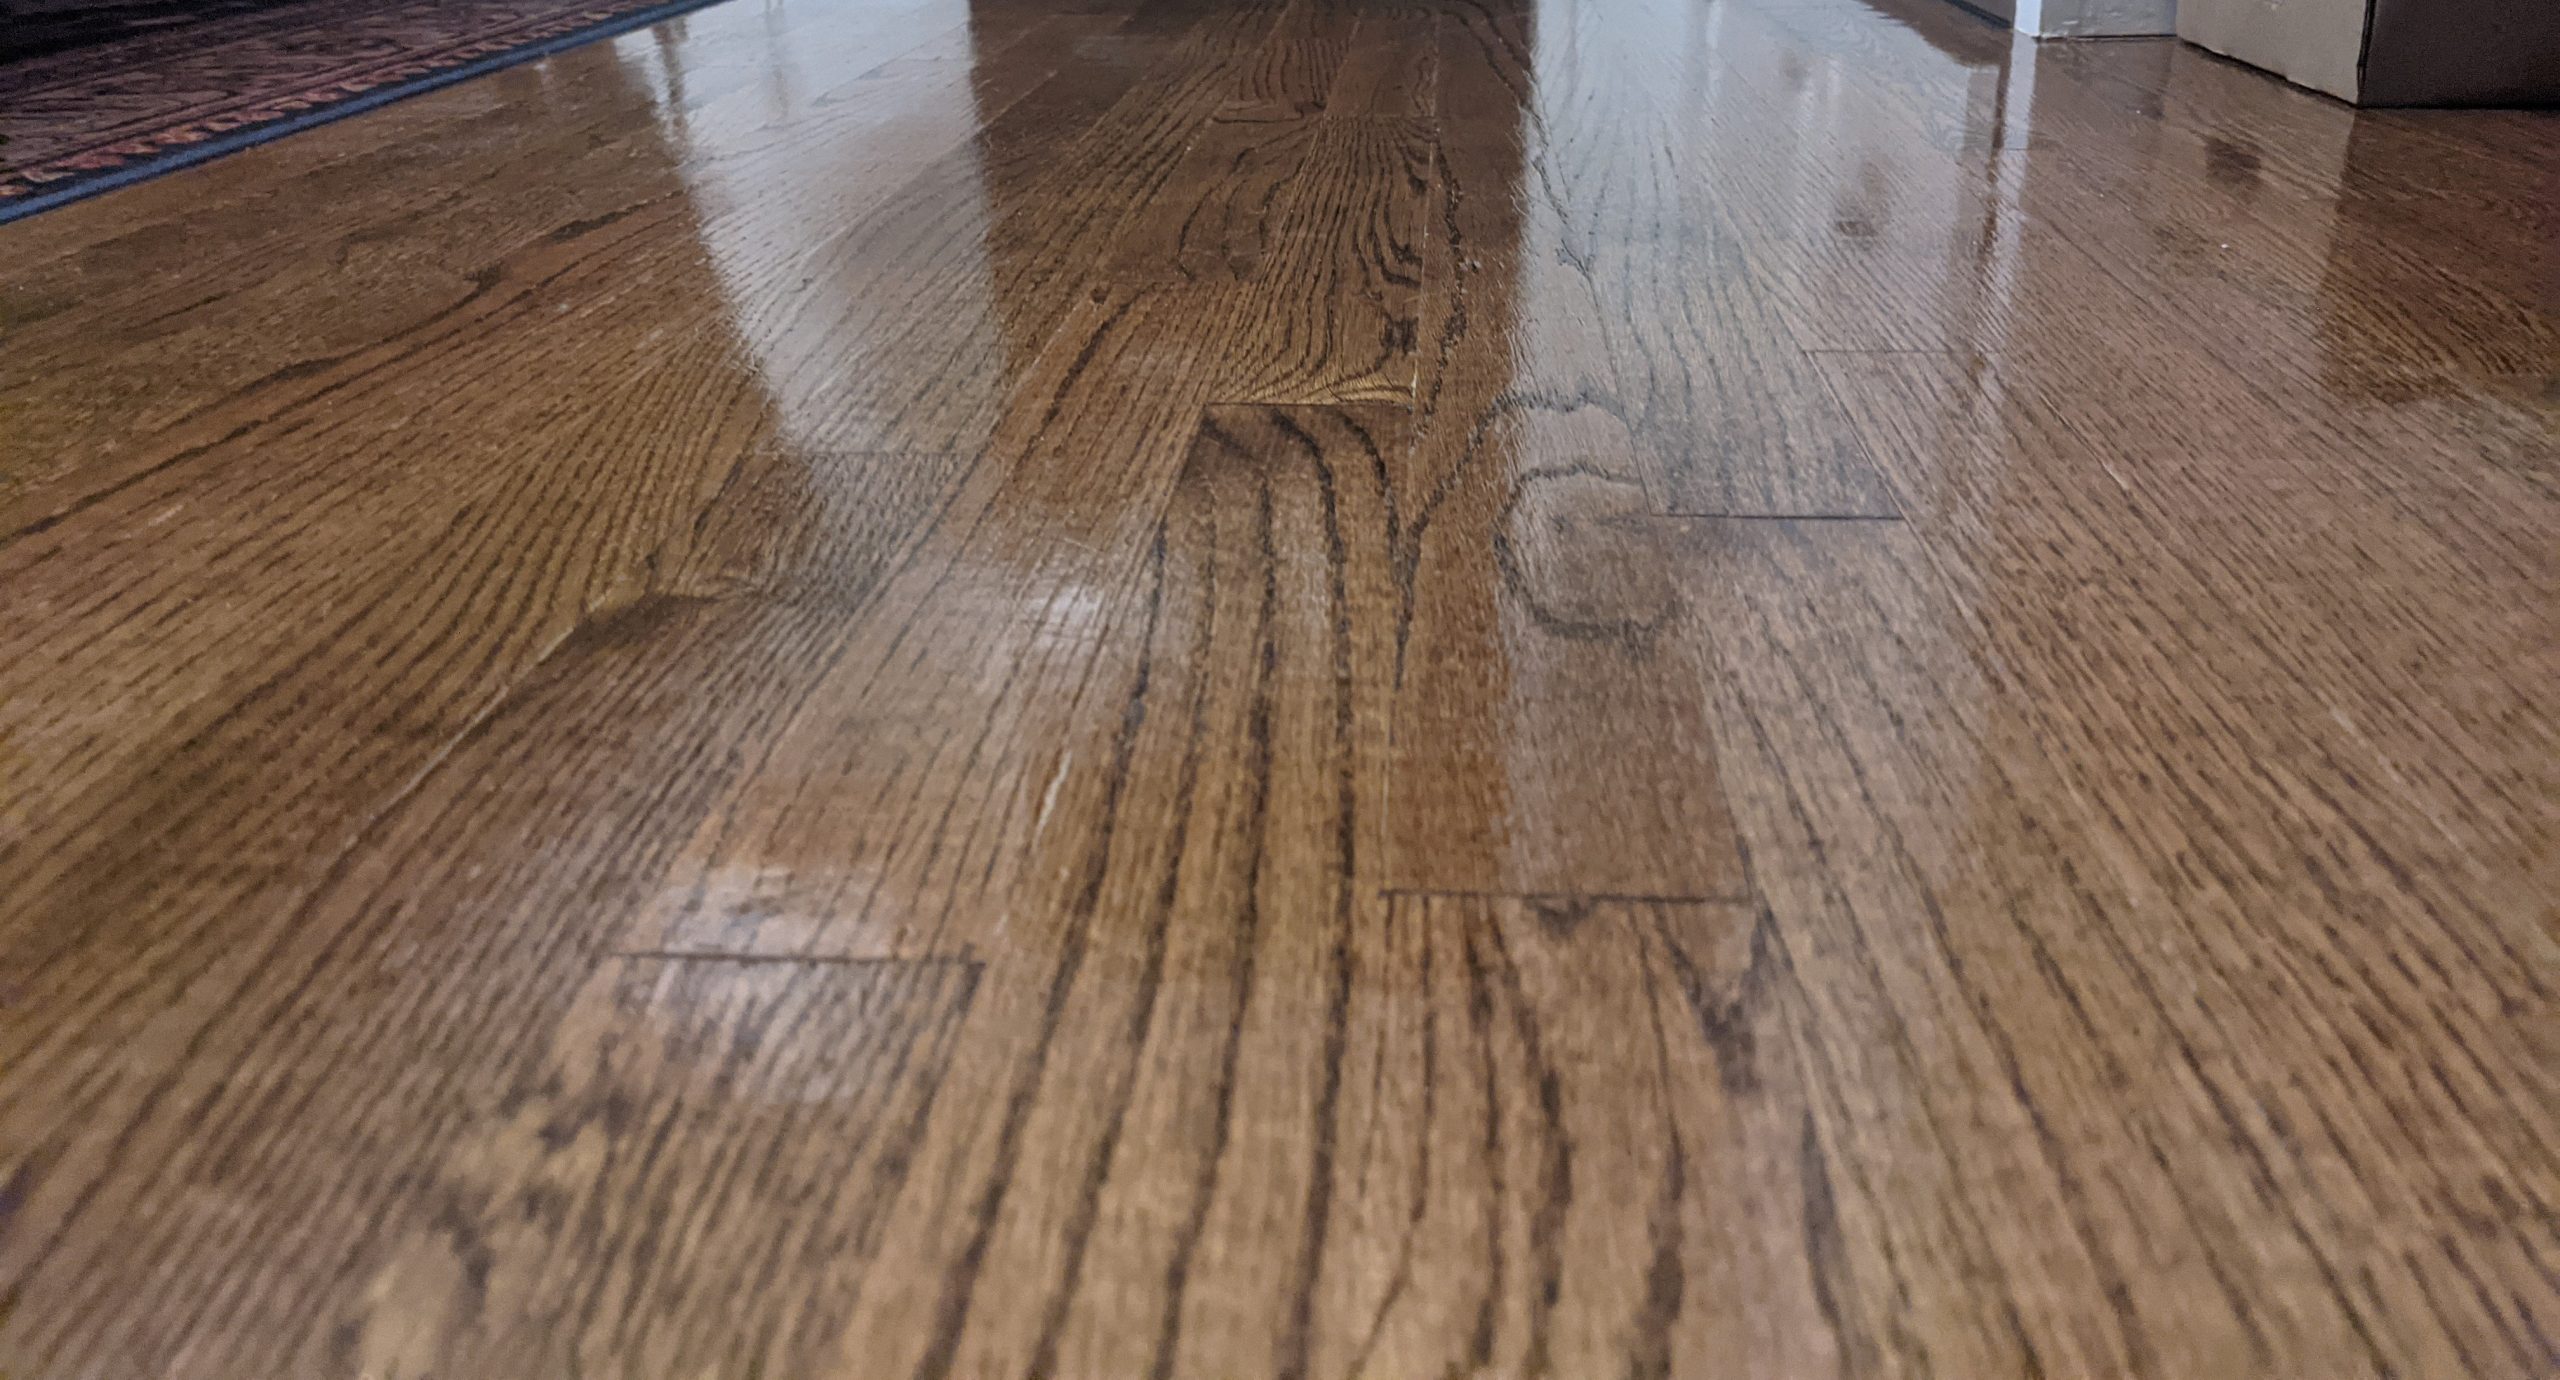 Hardwood Flooring - Paint Covered Overalls - Durham North Carolina